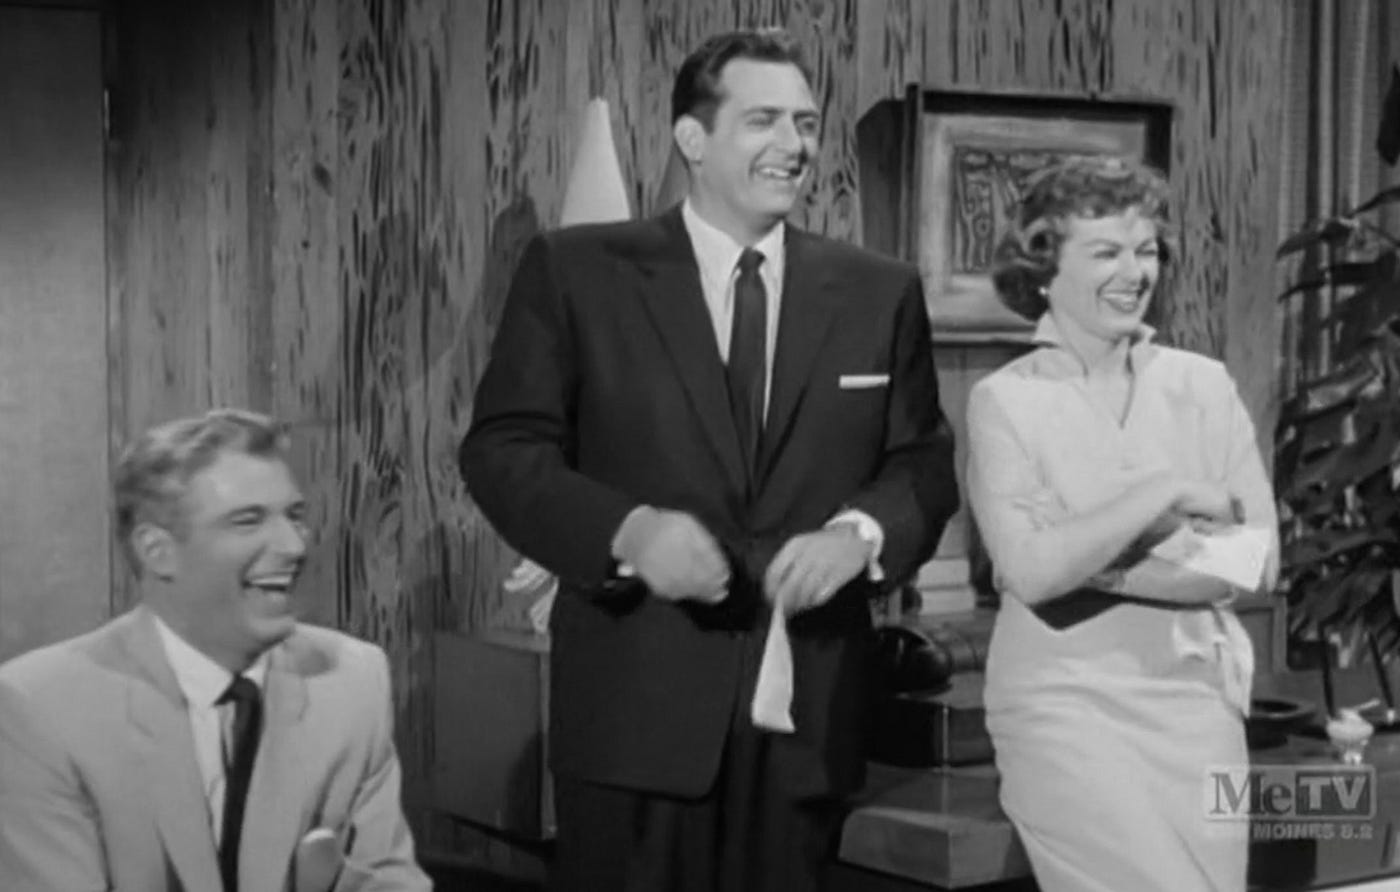 Watch Perry Mason Season 1